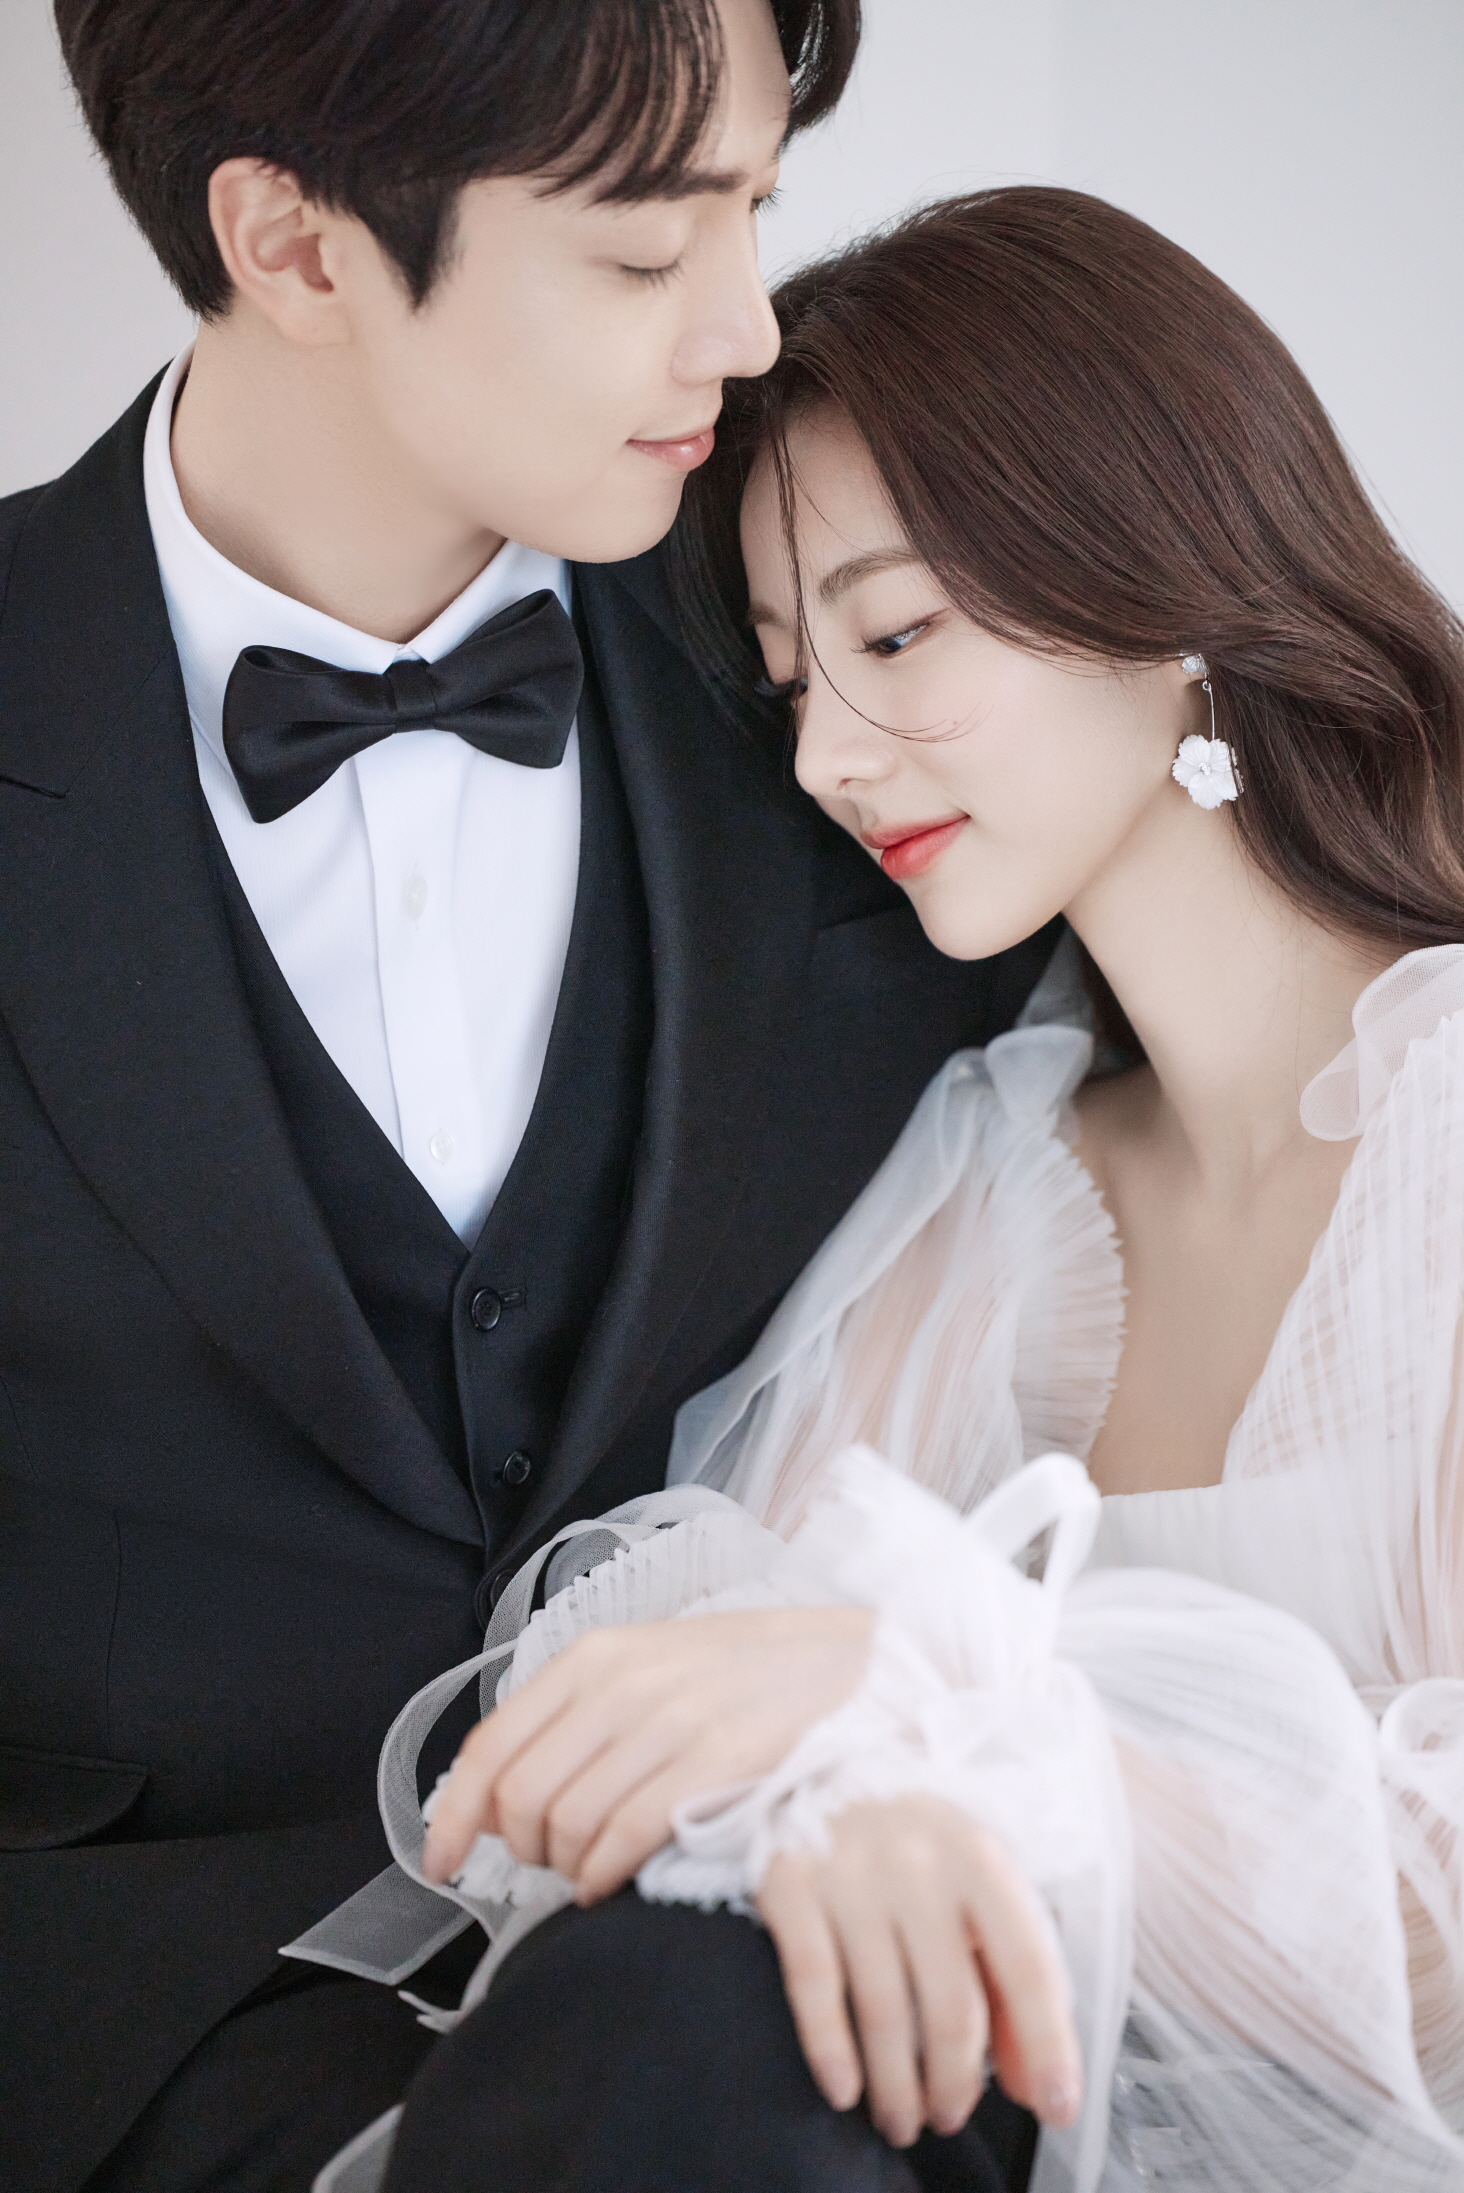 KOREAN WEDDING A- LUMIERE STUDIO : korea wedding pledge